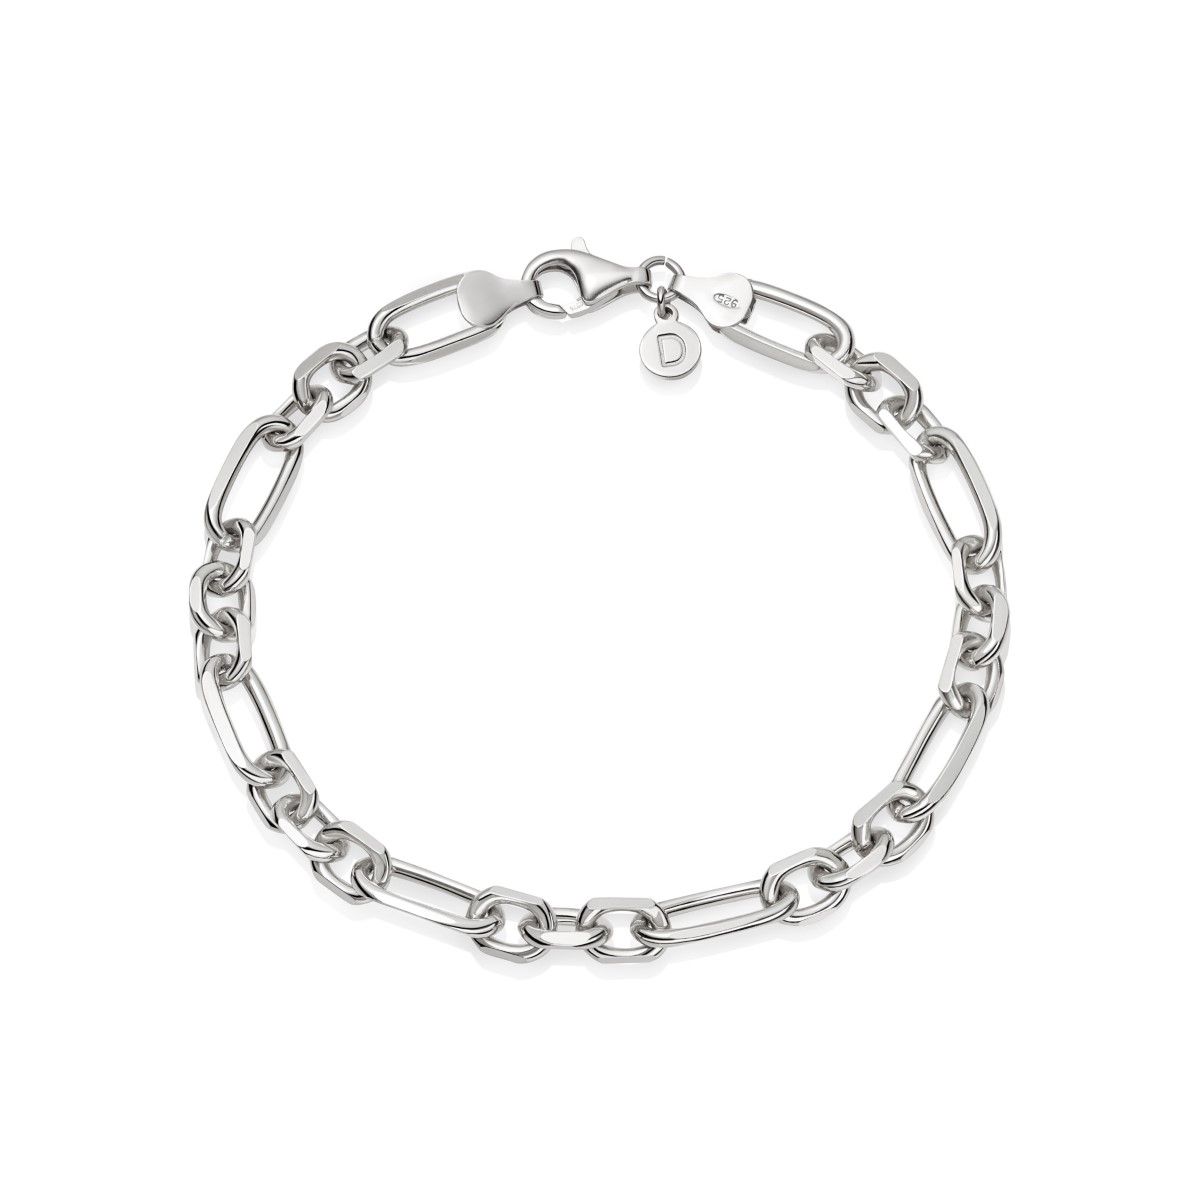 Buy Daisy Magnus Chain Bracelet - Silver Online in UK